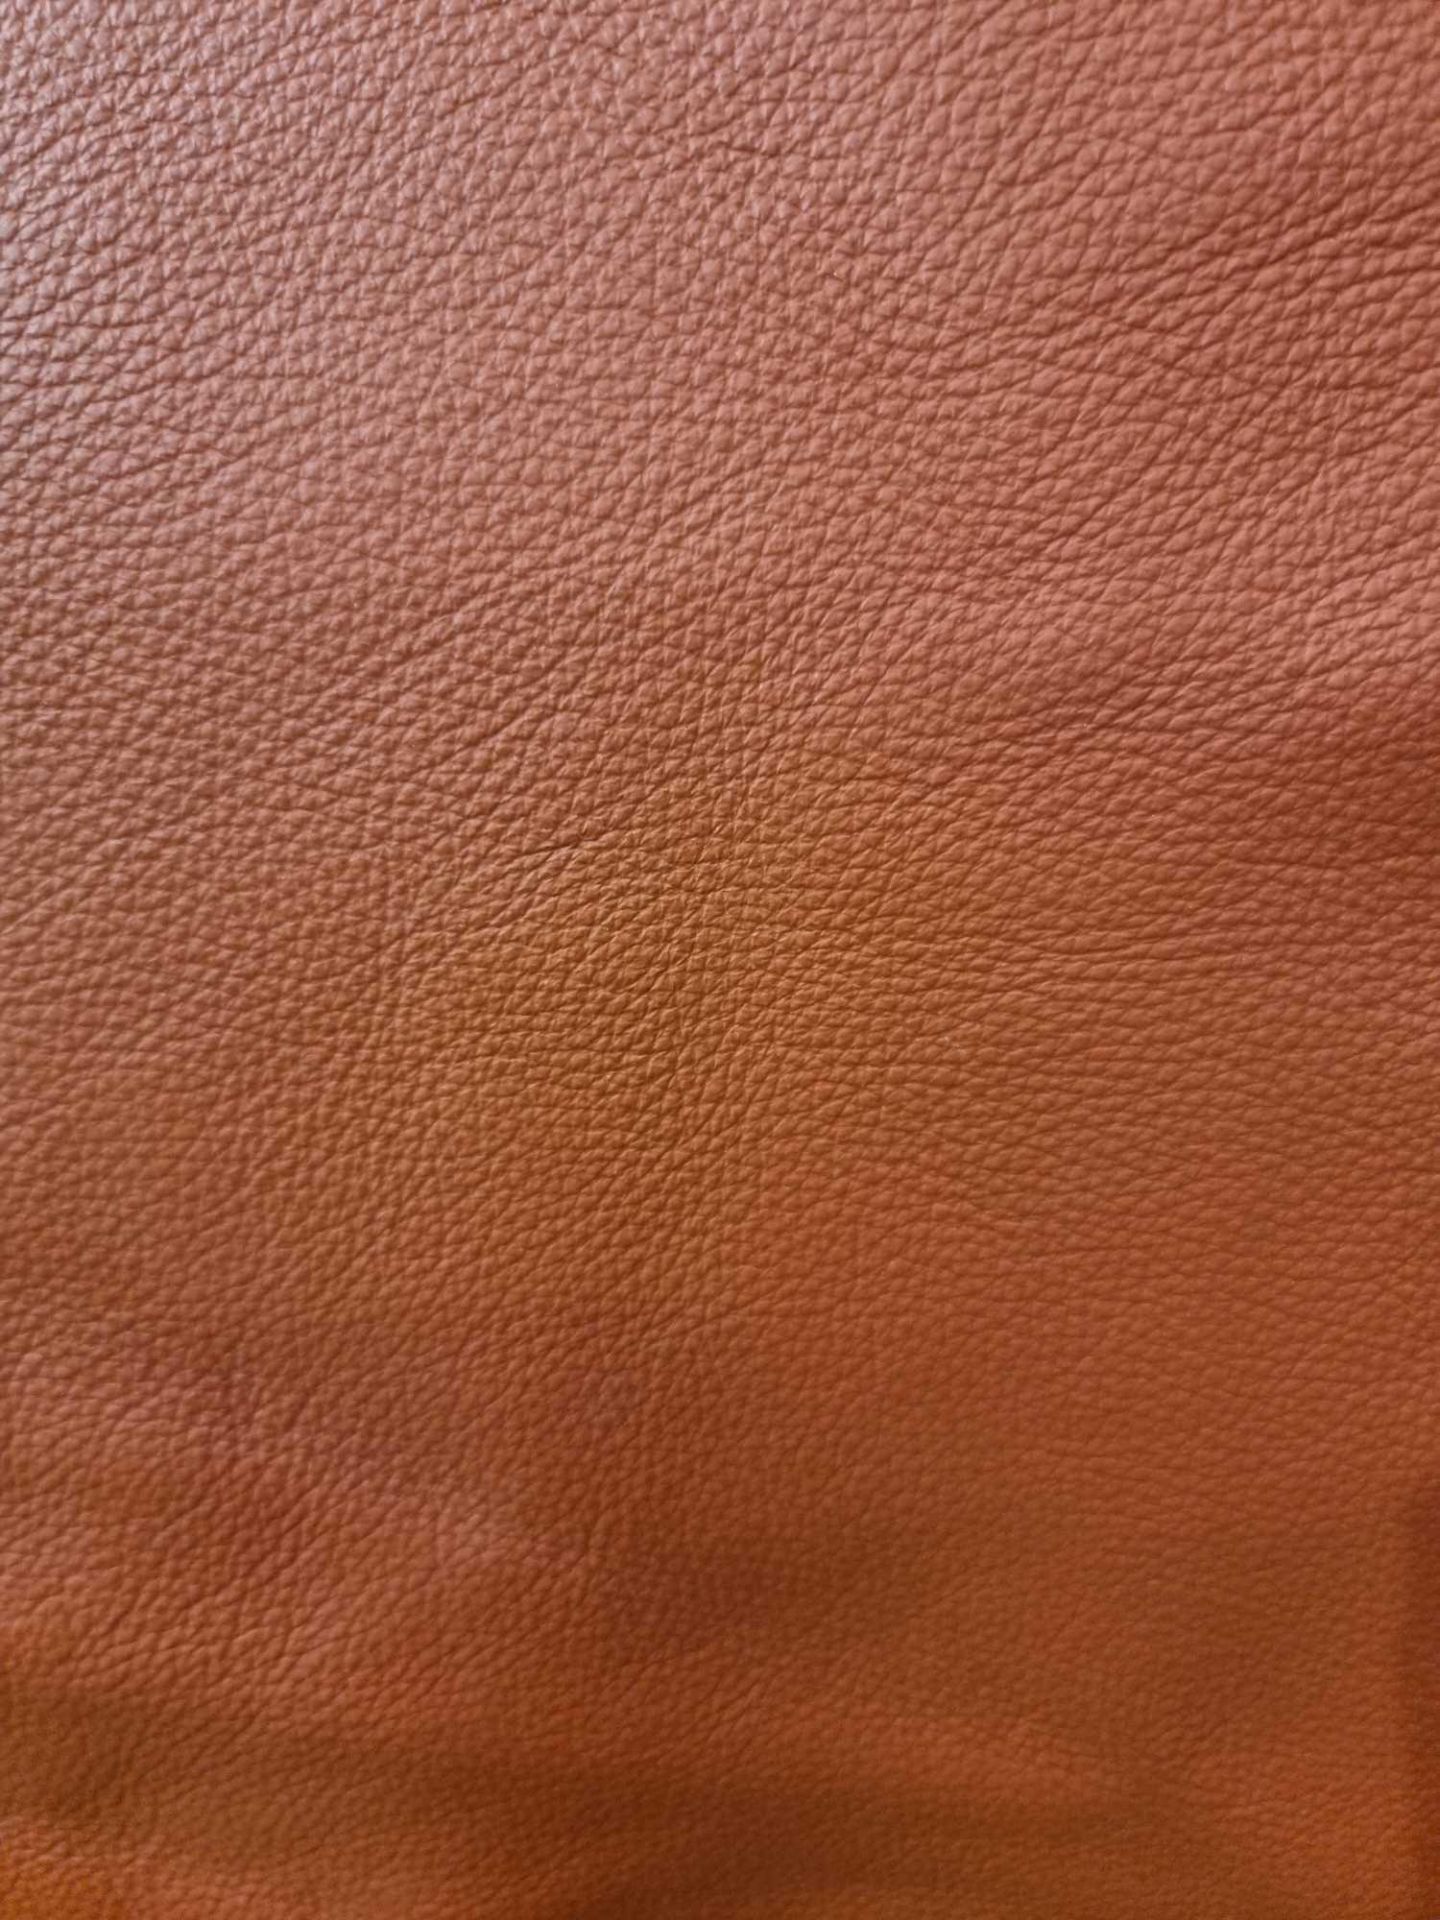 Contempo Red Orange Leather Hide approximately 4.4mÂ² 2.2 x 2cm - Bild 2 aus 3